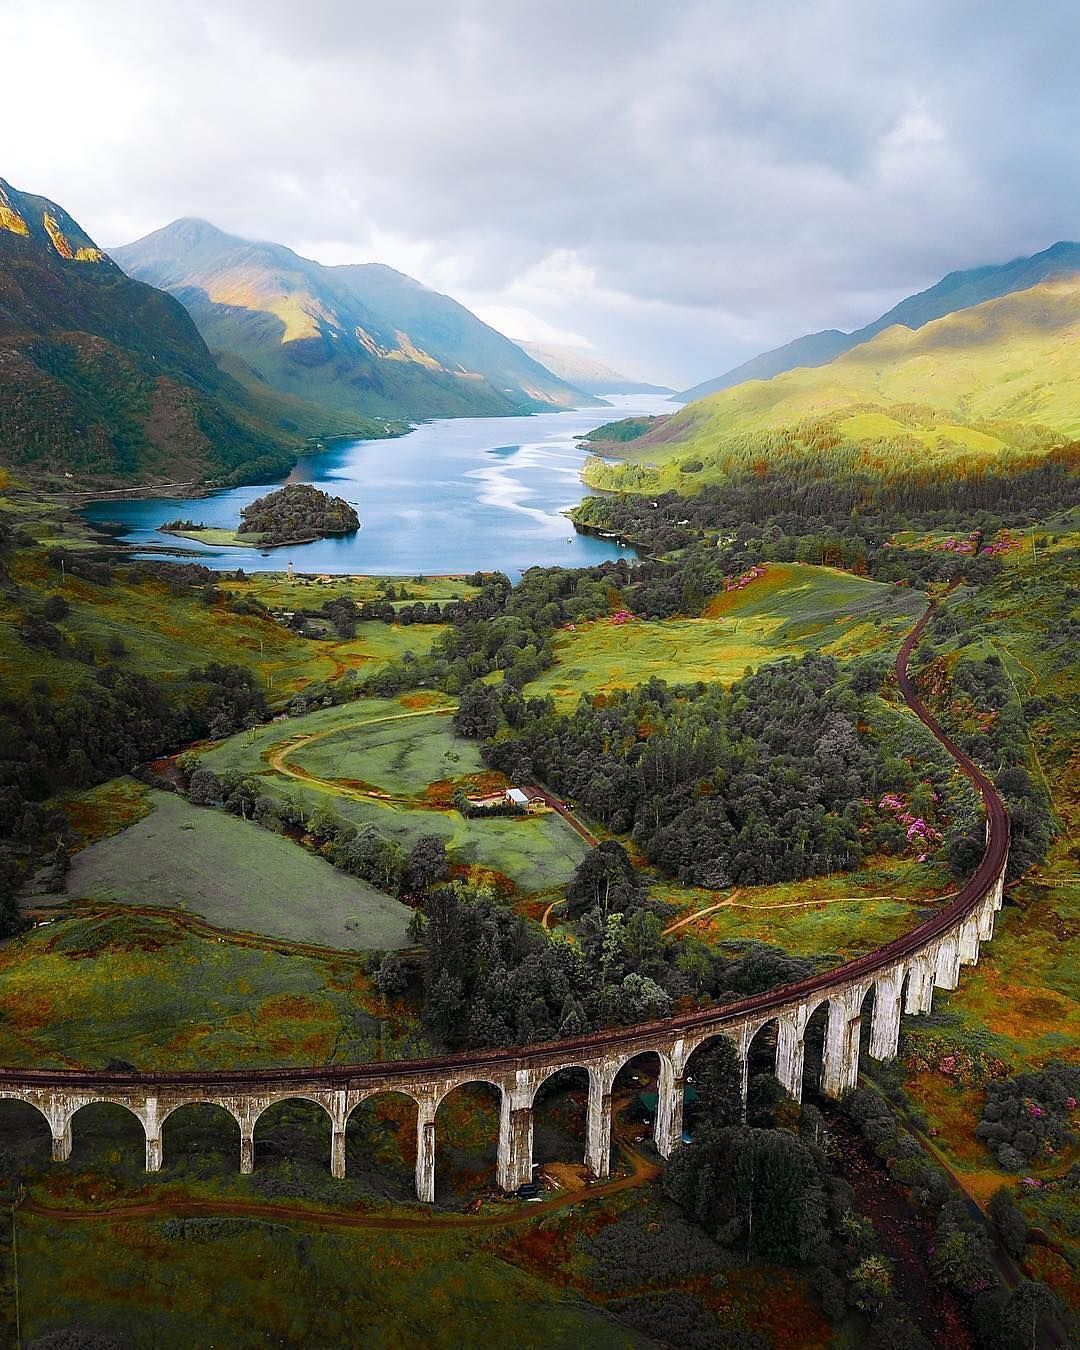 Glenfinnan - Scotland's most picturesque village - Viaduct, Harry Potter, Scotland, Great Britain, Tourism, Travels, Nature, The photo, Longpost